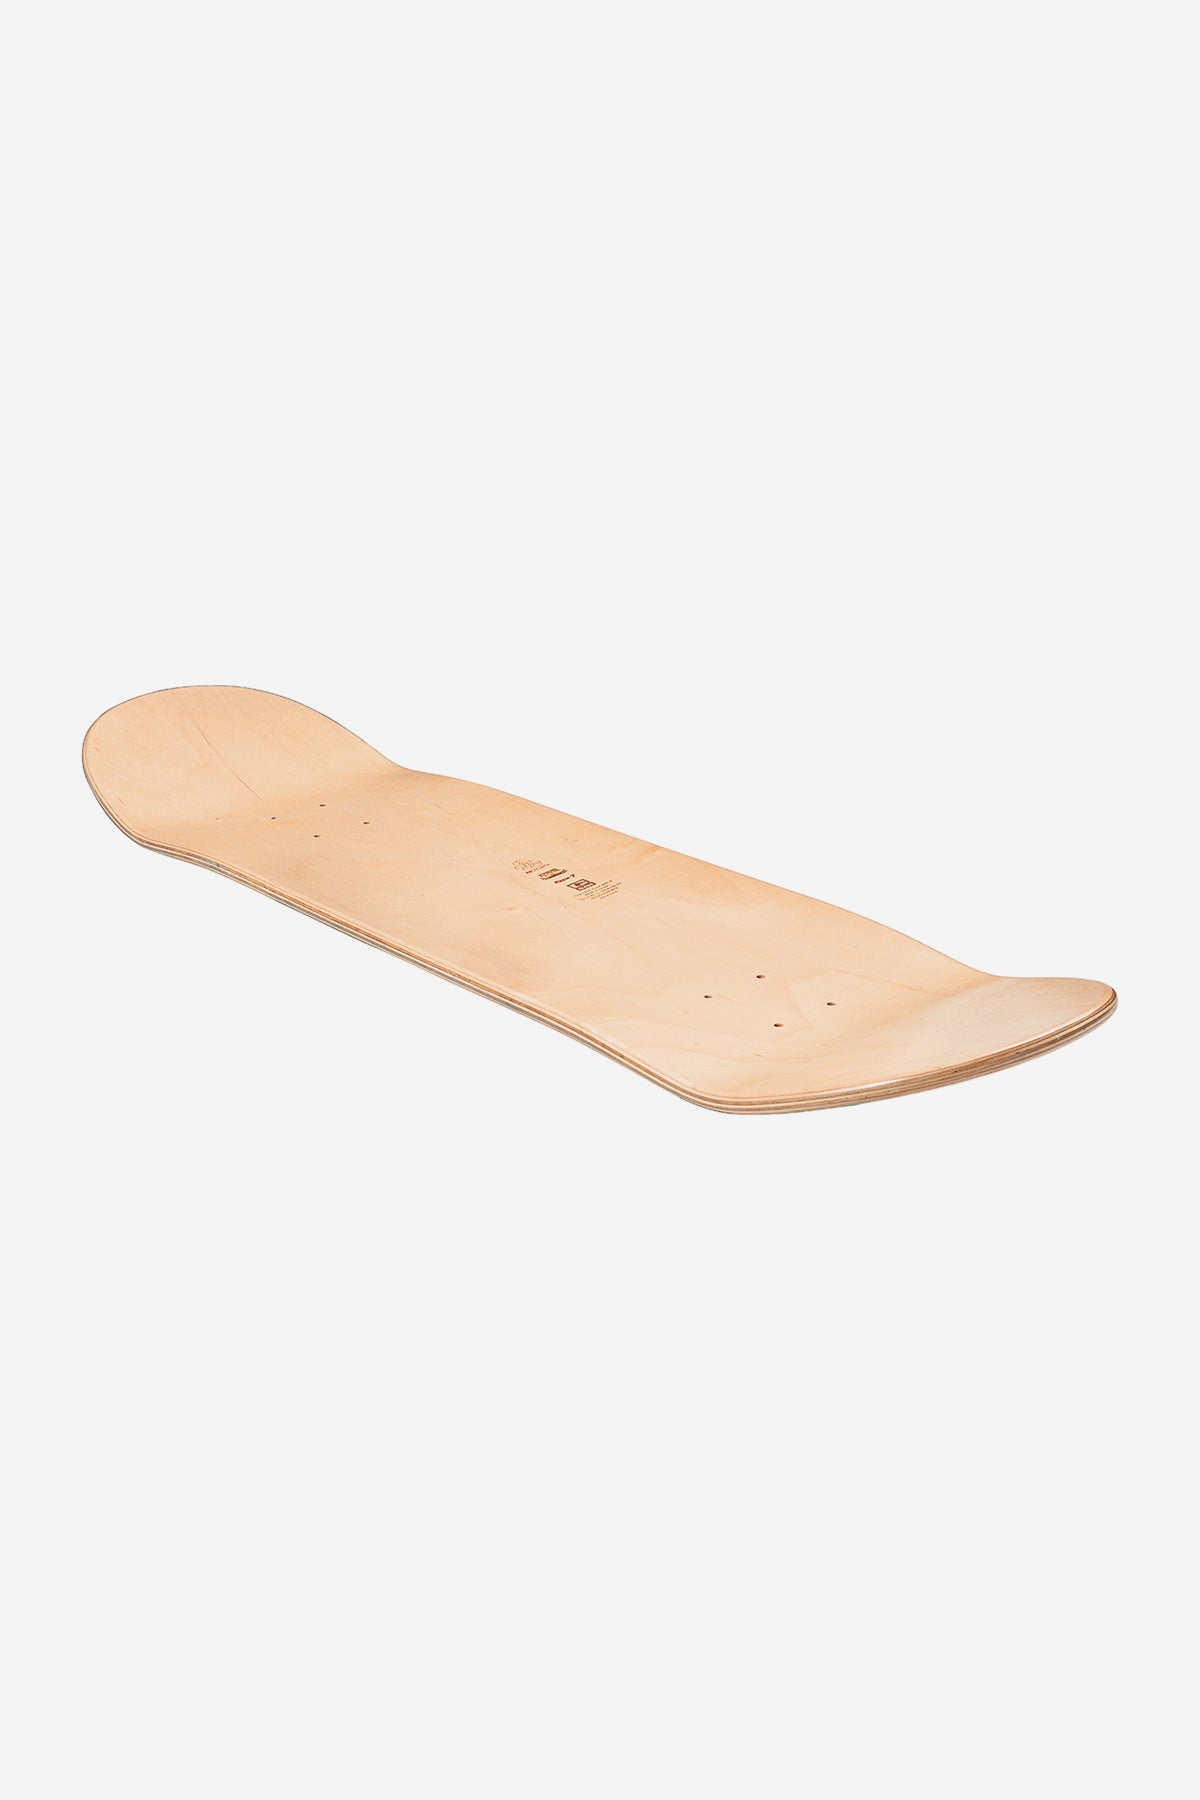 Globe - Goodstock - Clay - 8,5" Skateboard Deck